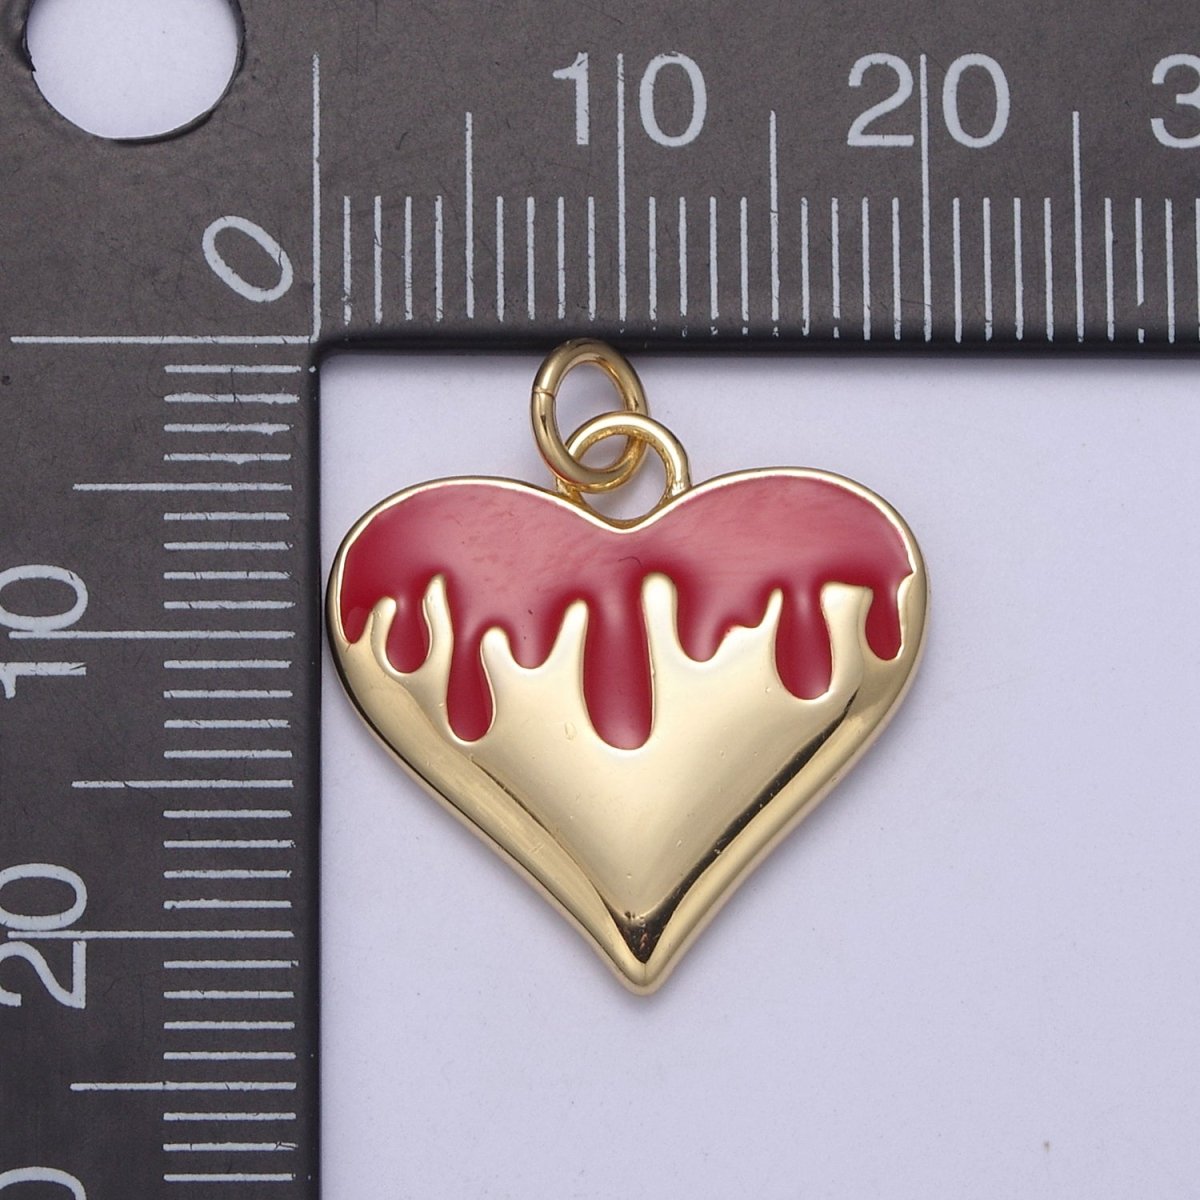 14k Gold Filled Broken Heart Charm Dripping Blood Red Black White Enamel Love for Valentine Jewelry Making N-347 - N-349 - DLUXCA